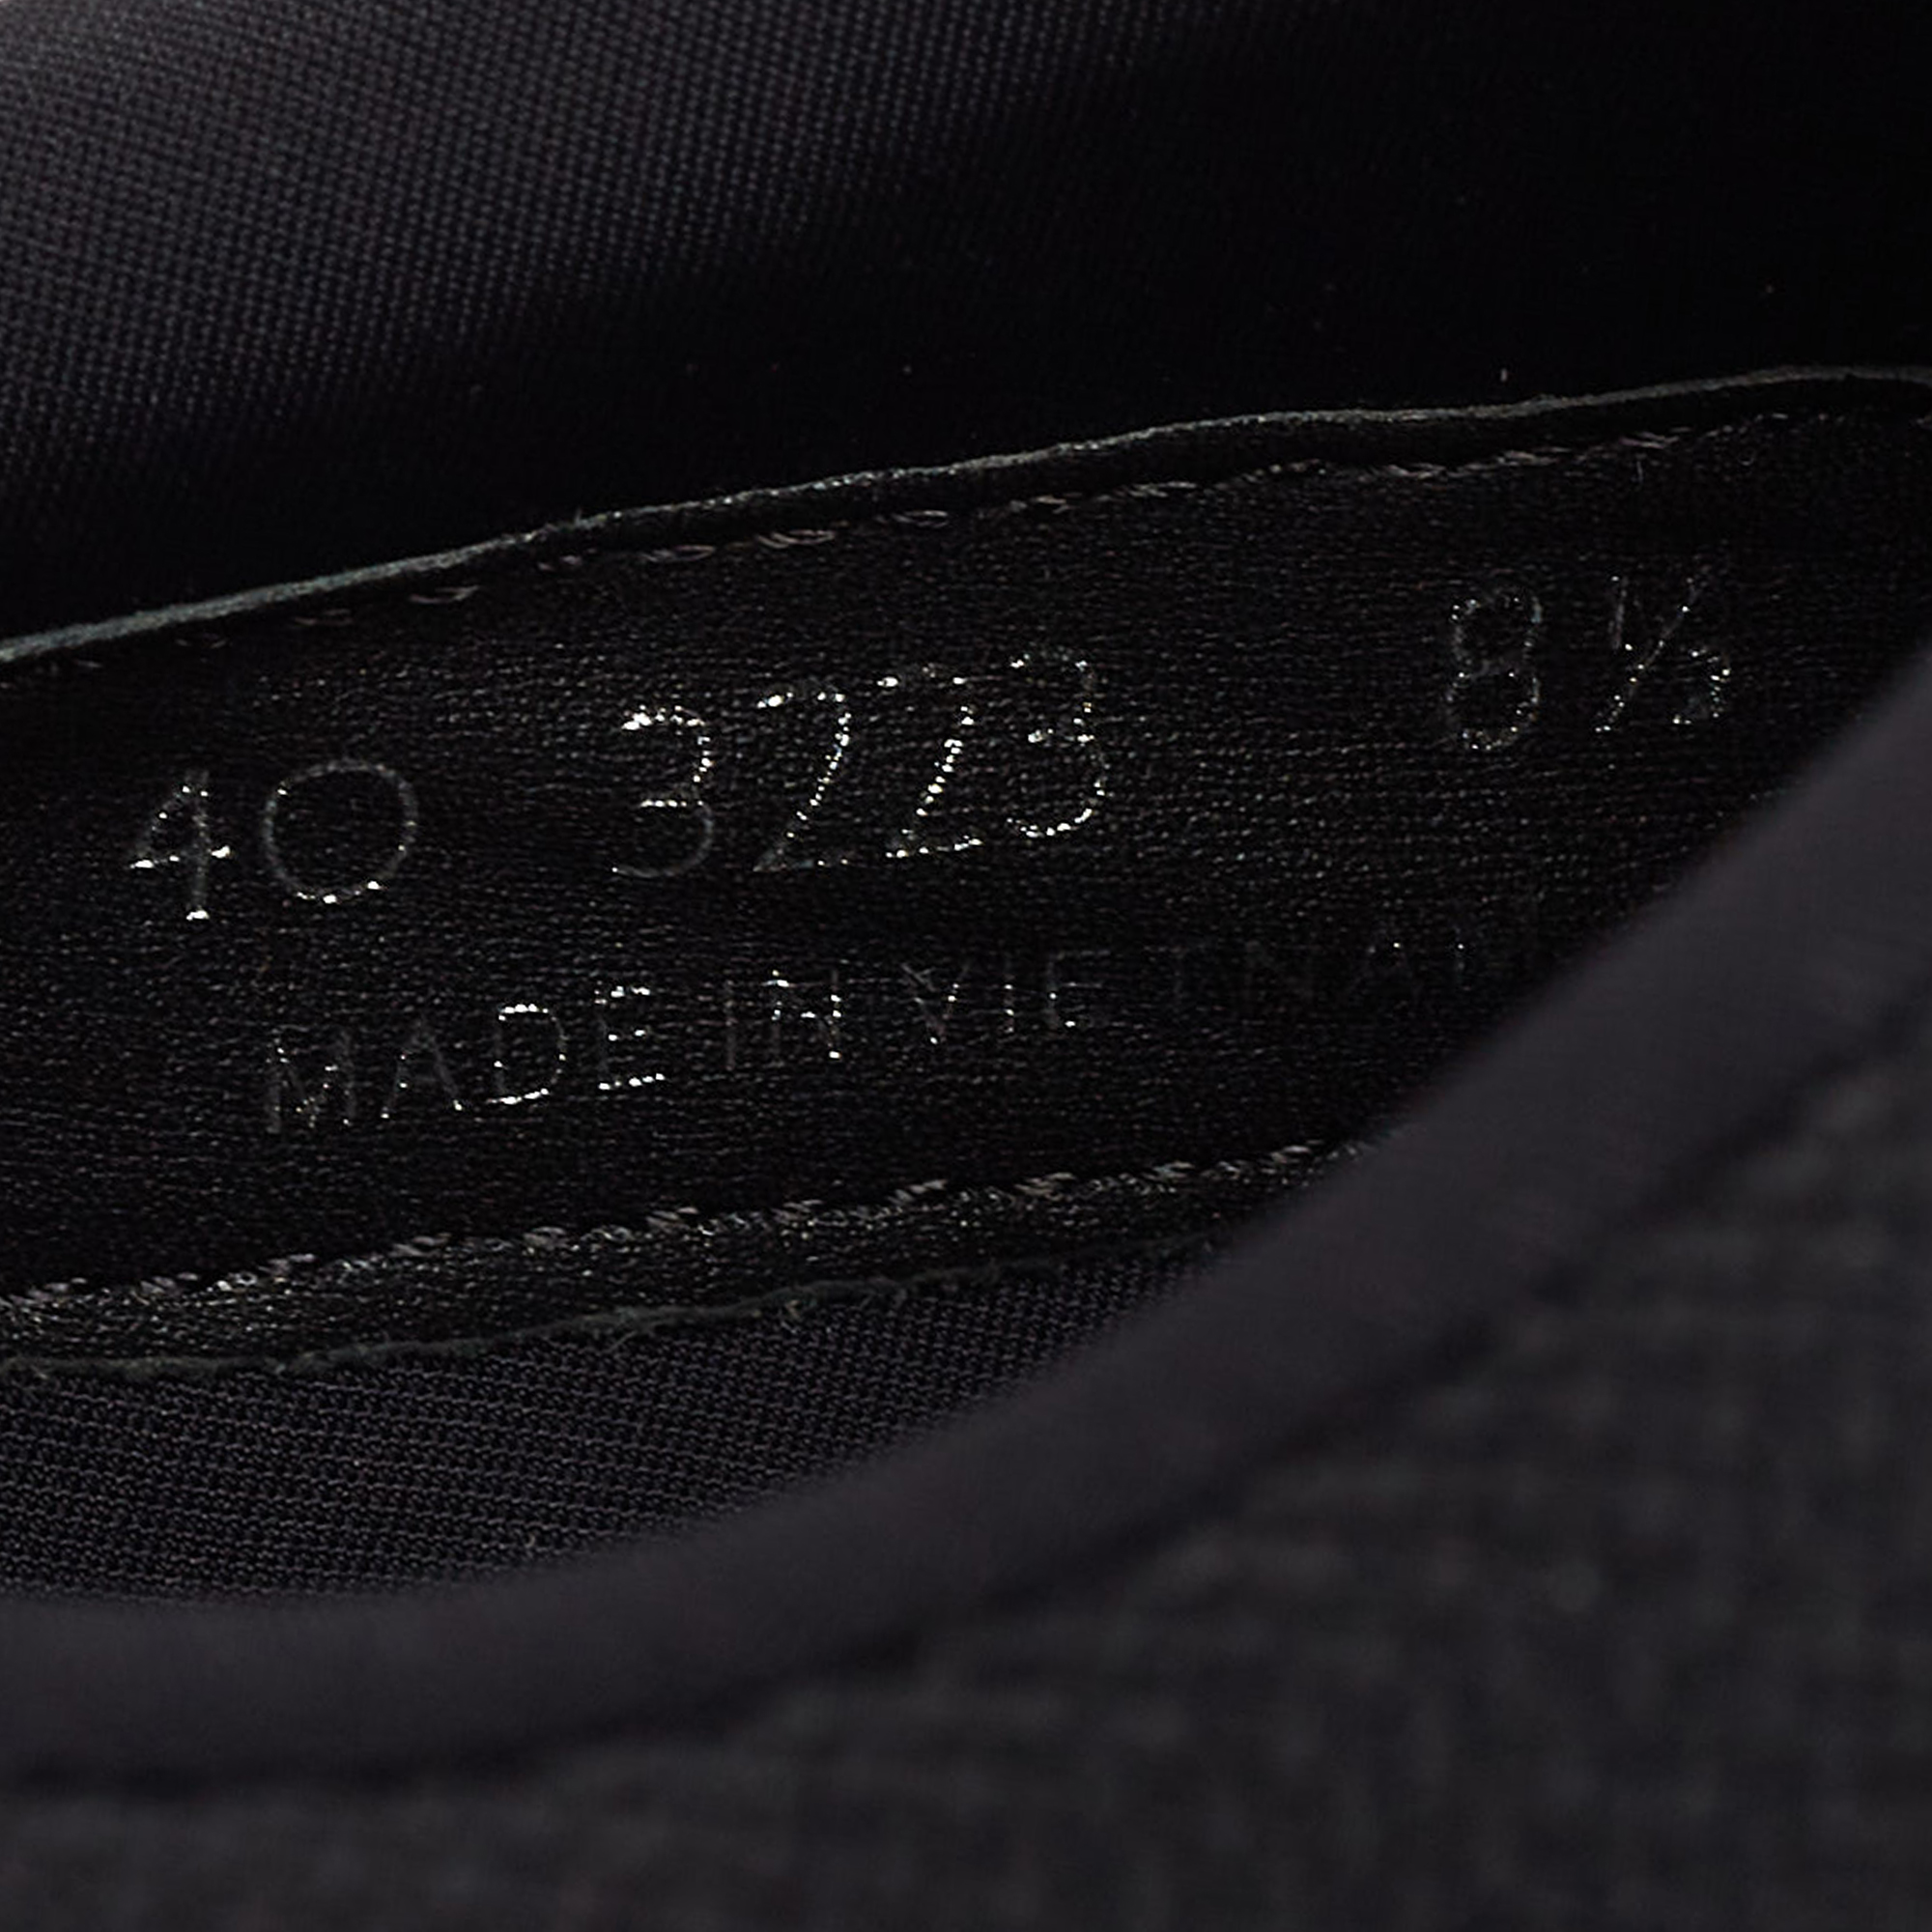 Prada Black/Blue Knit Fabric Low Top Sneakers Size 42.5